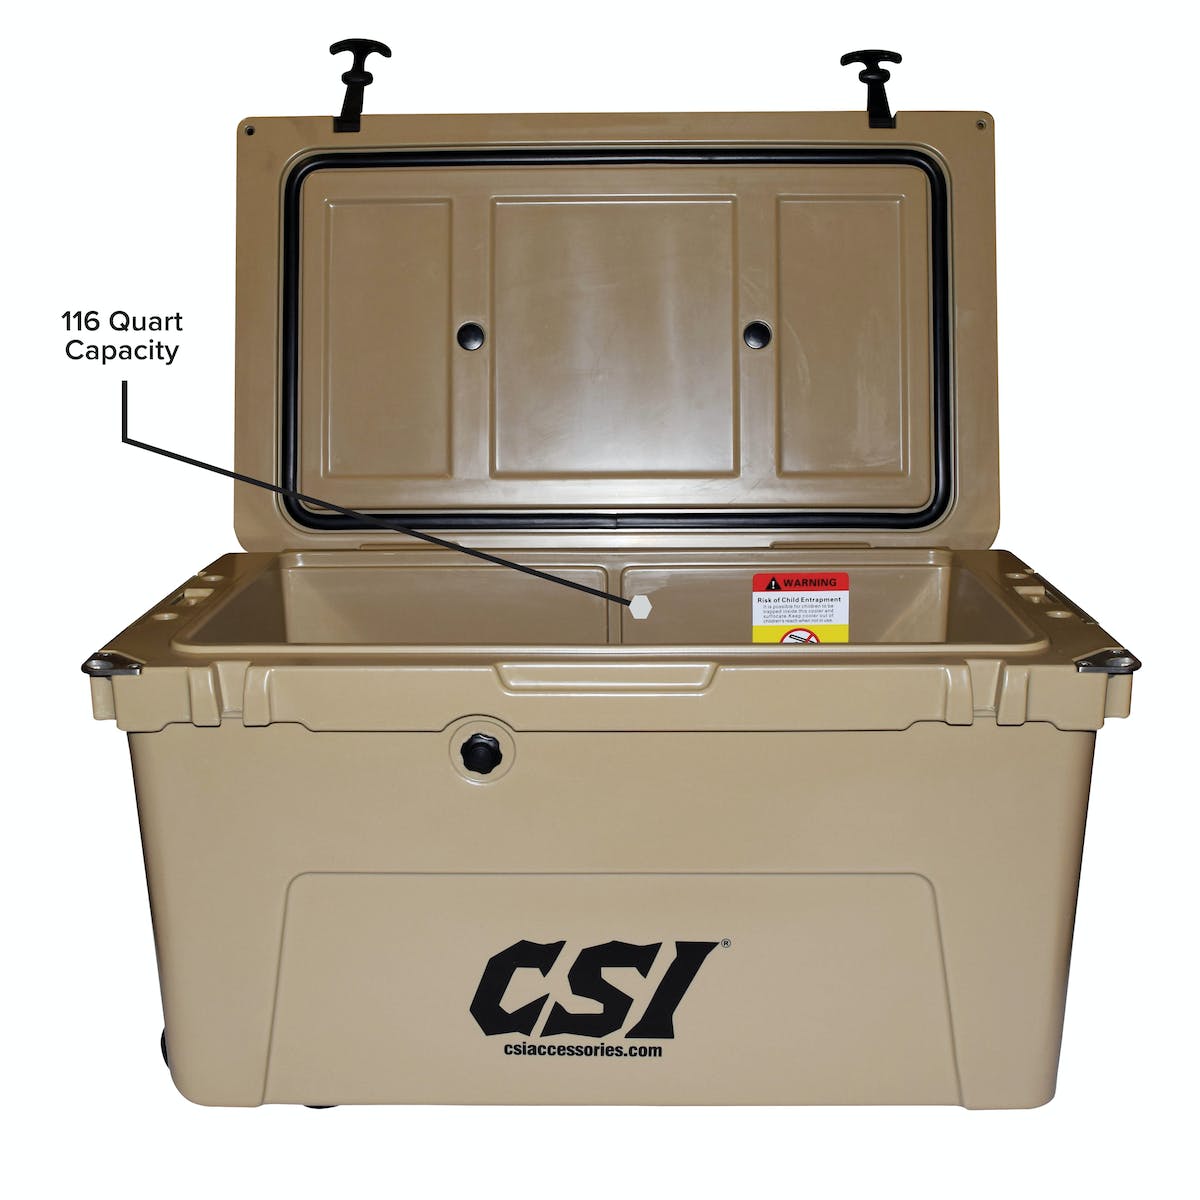 CSI Accessories W60110 Cooler